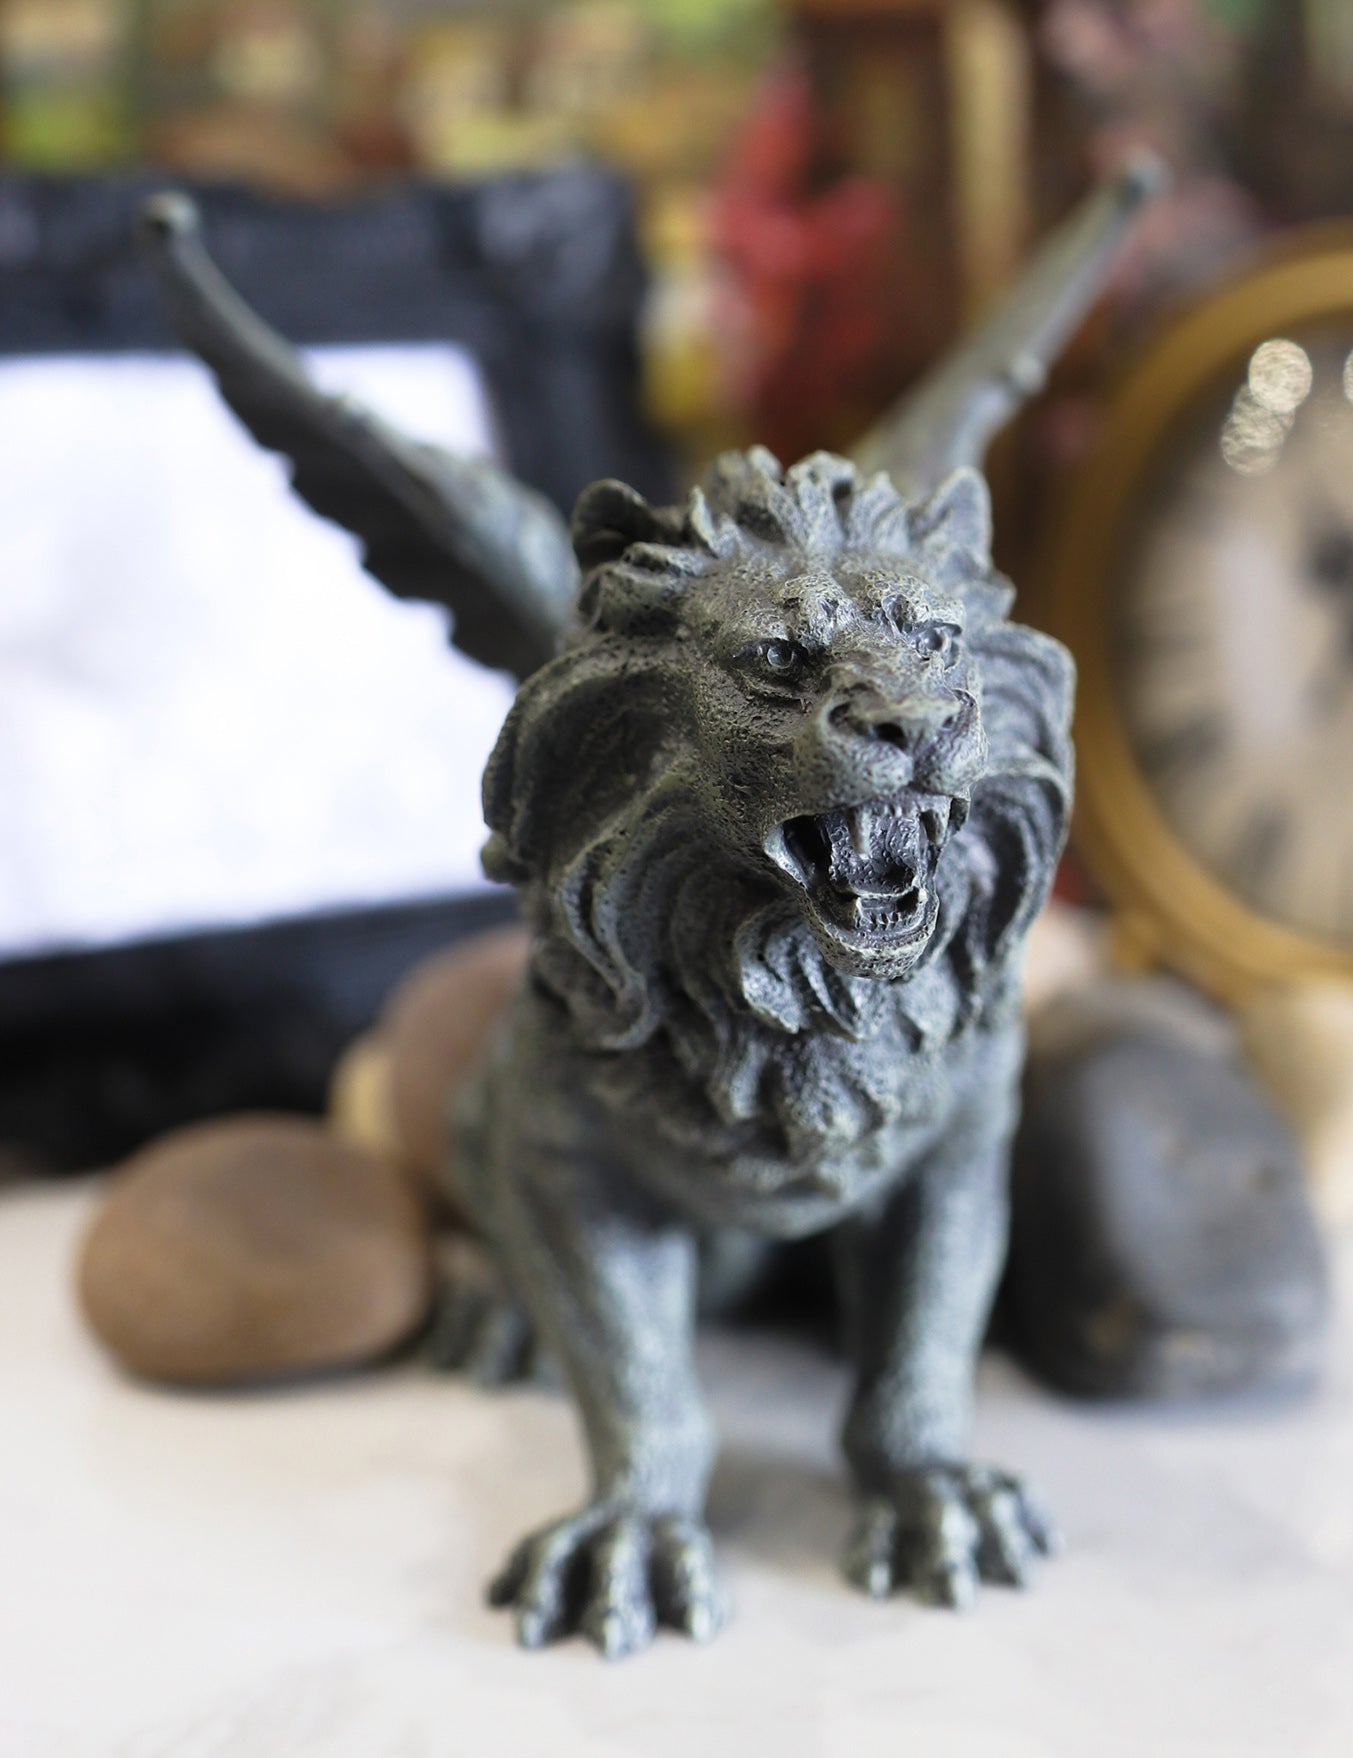 Ebros Gift Ebros Gothic Winged Aslan Roaring Lion Battle War Cry Gargoyle Figurine 7"H